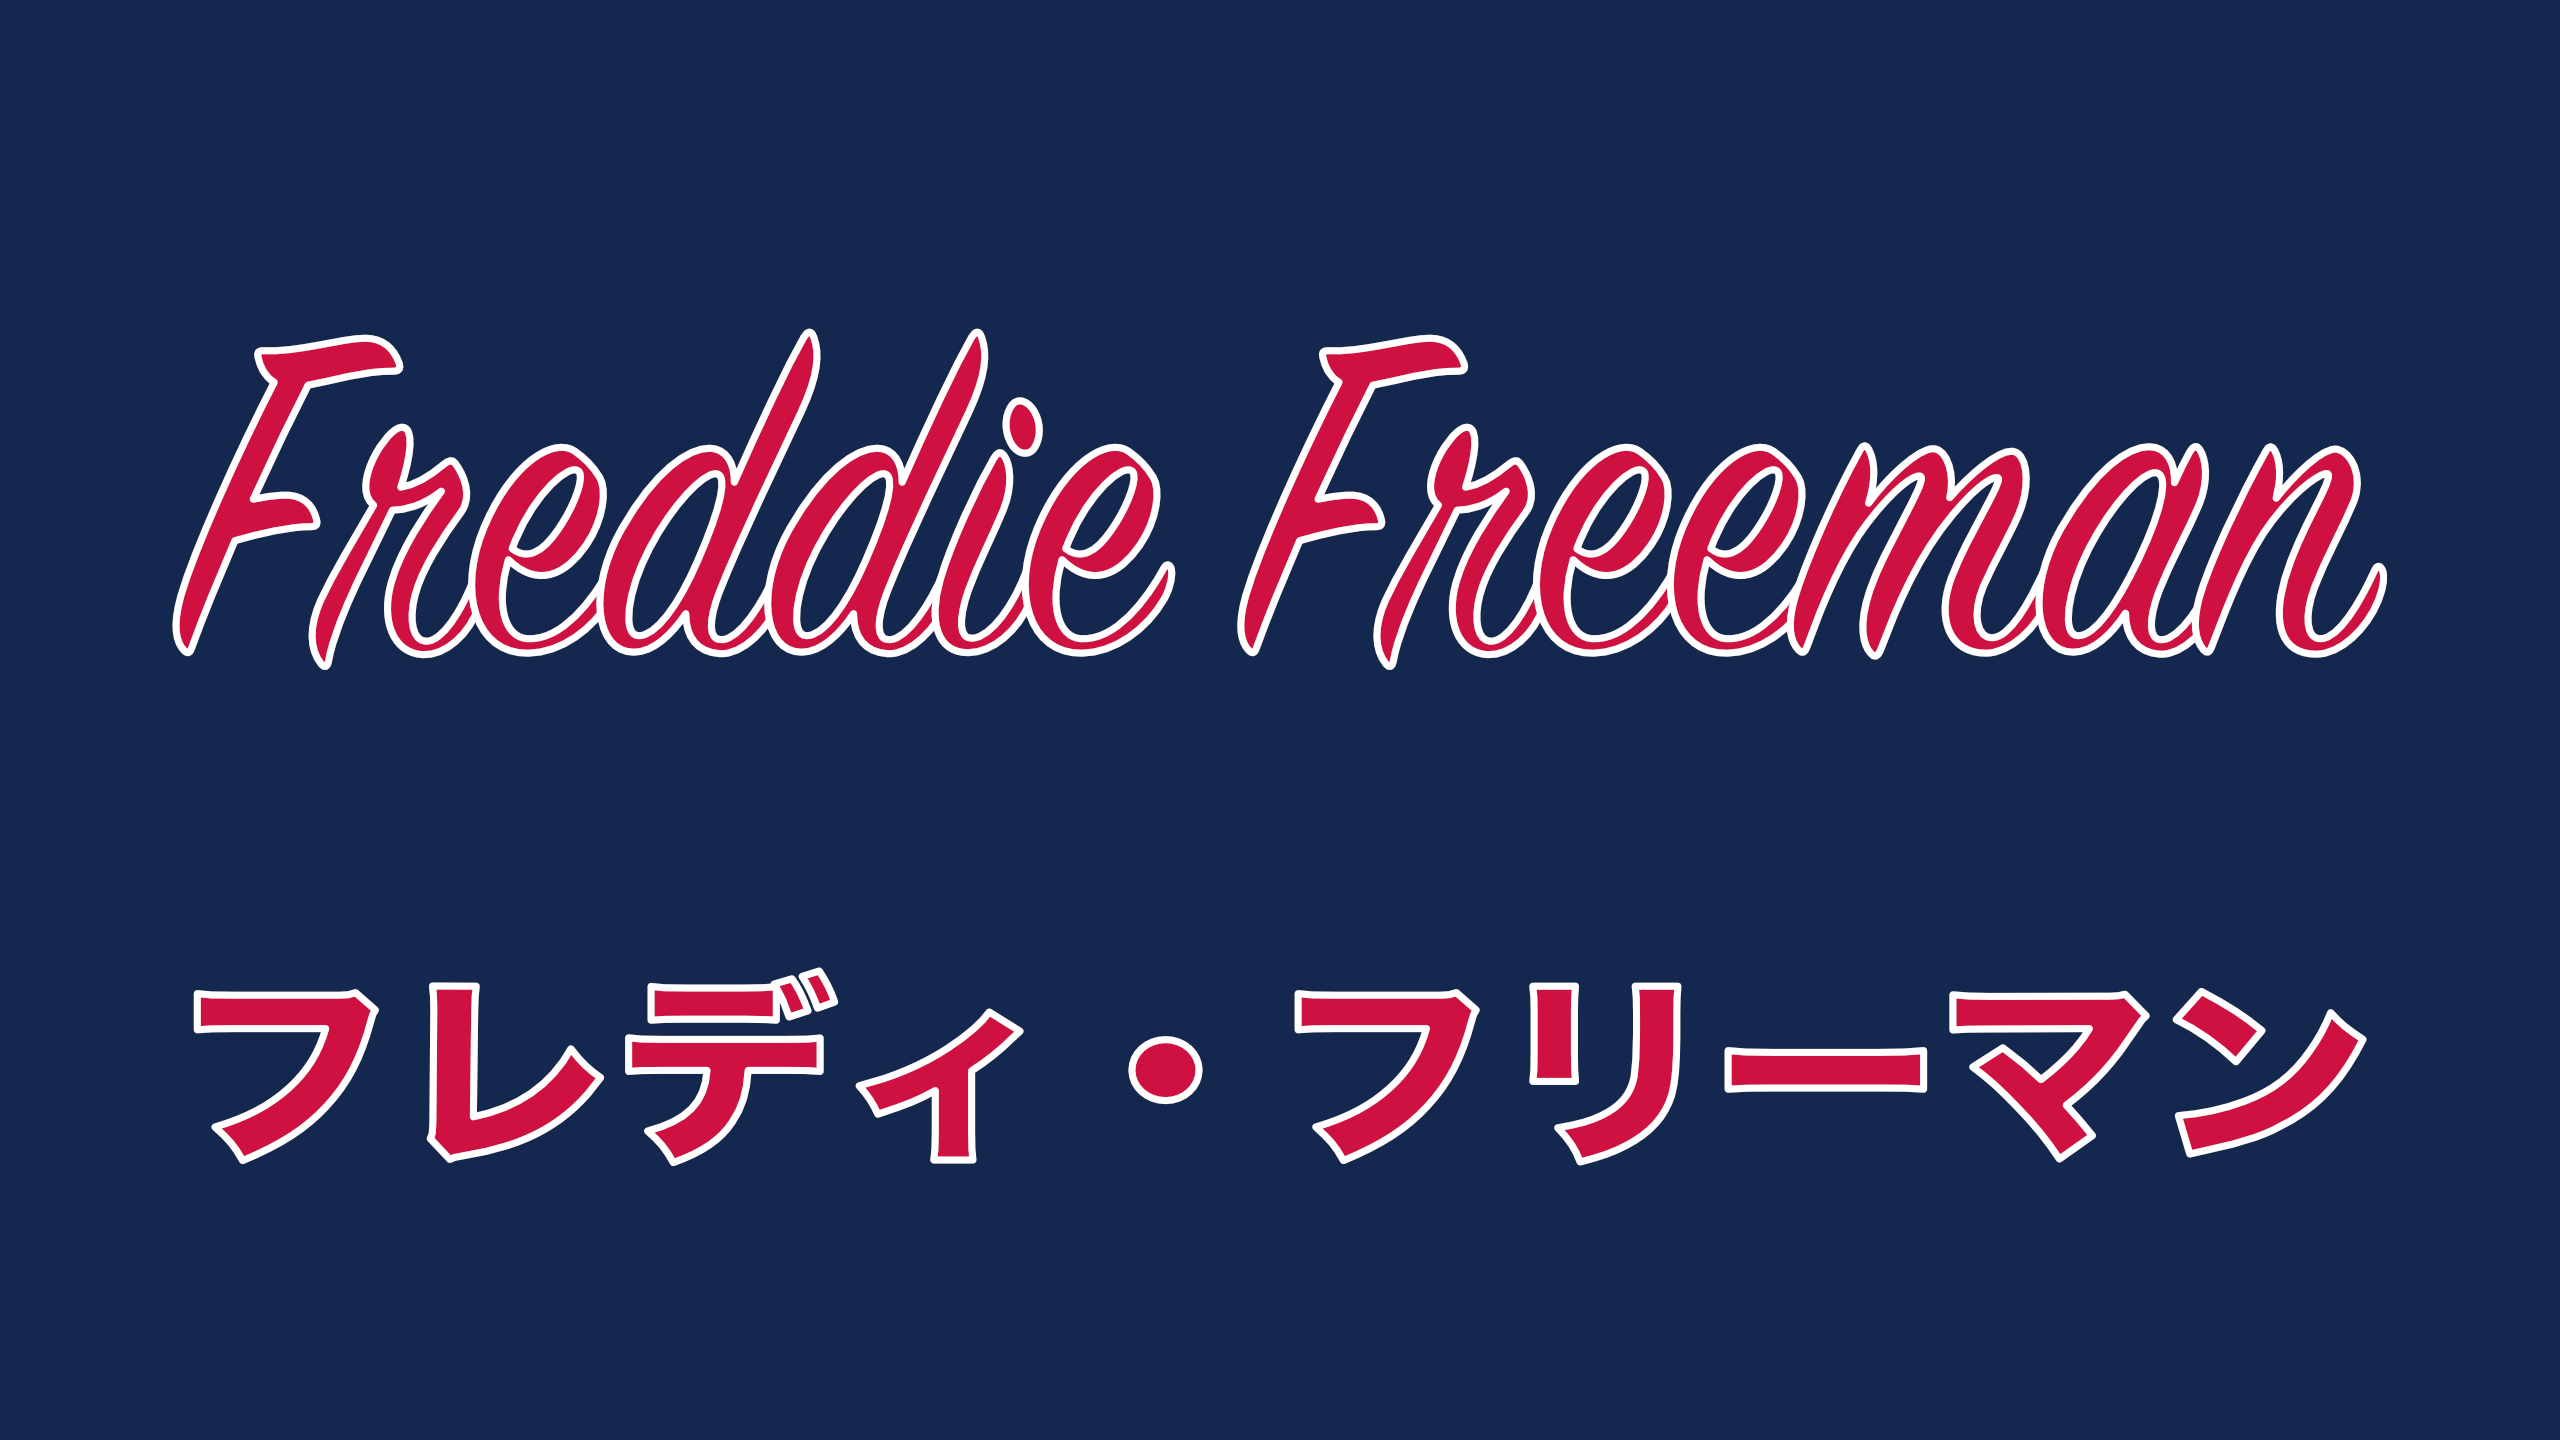 freddie-freeman